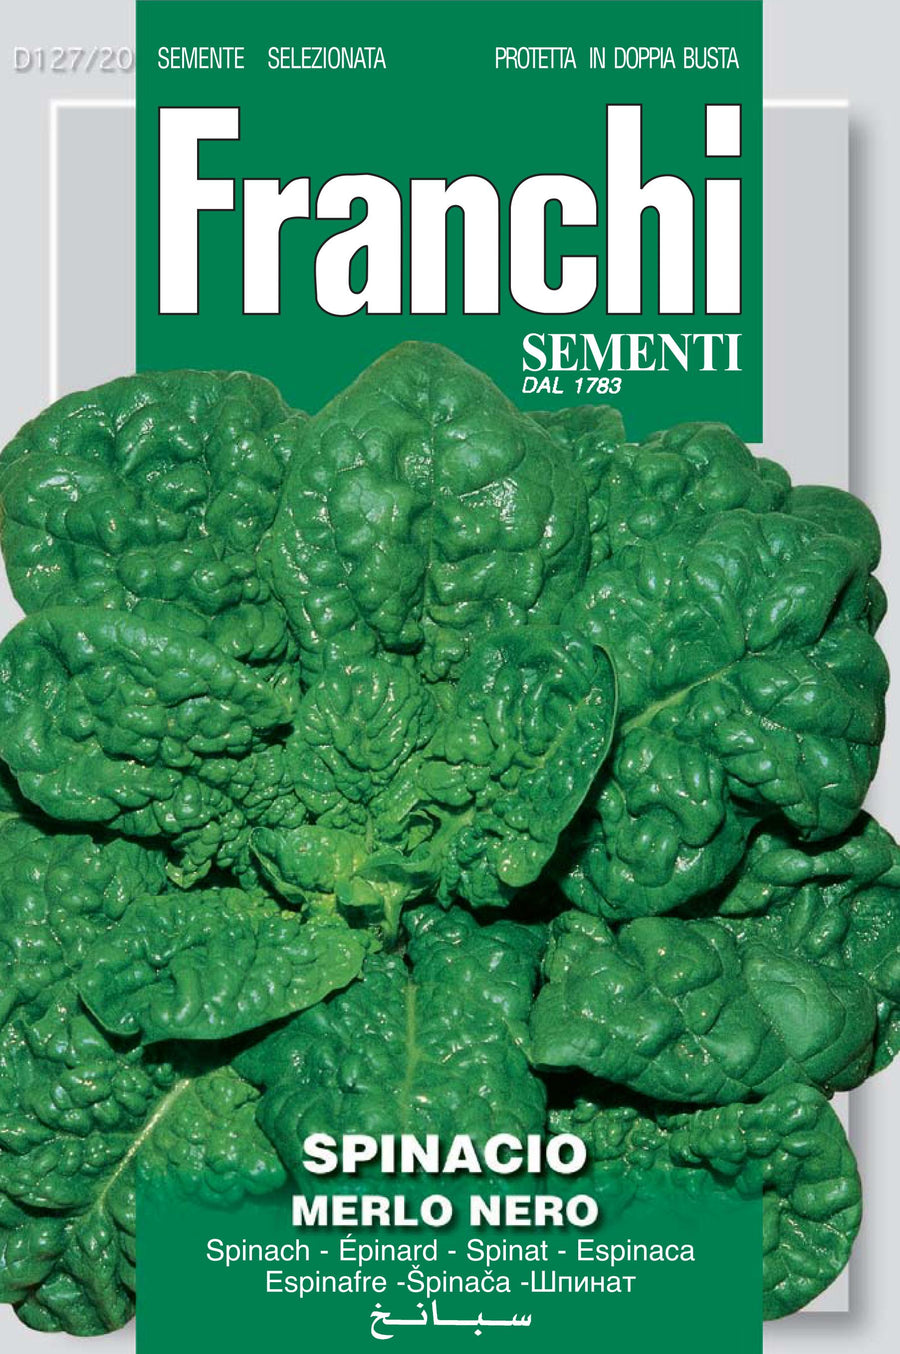 Franchi Spinach 'Merlo Nero' Seeds